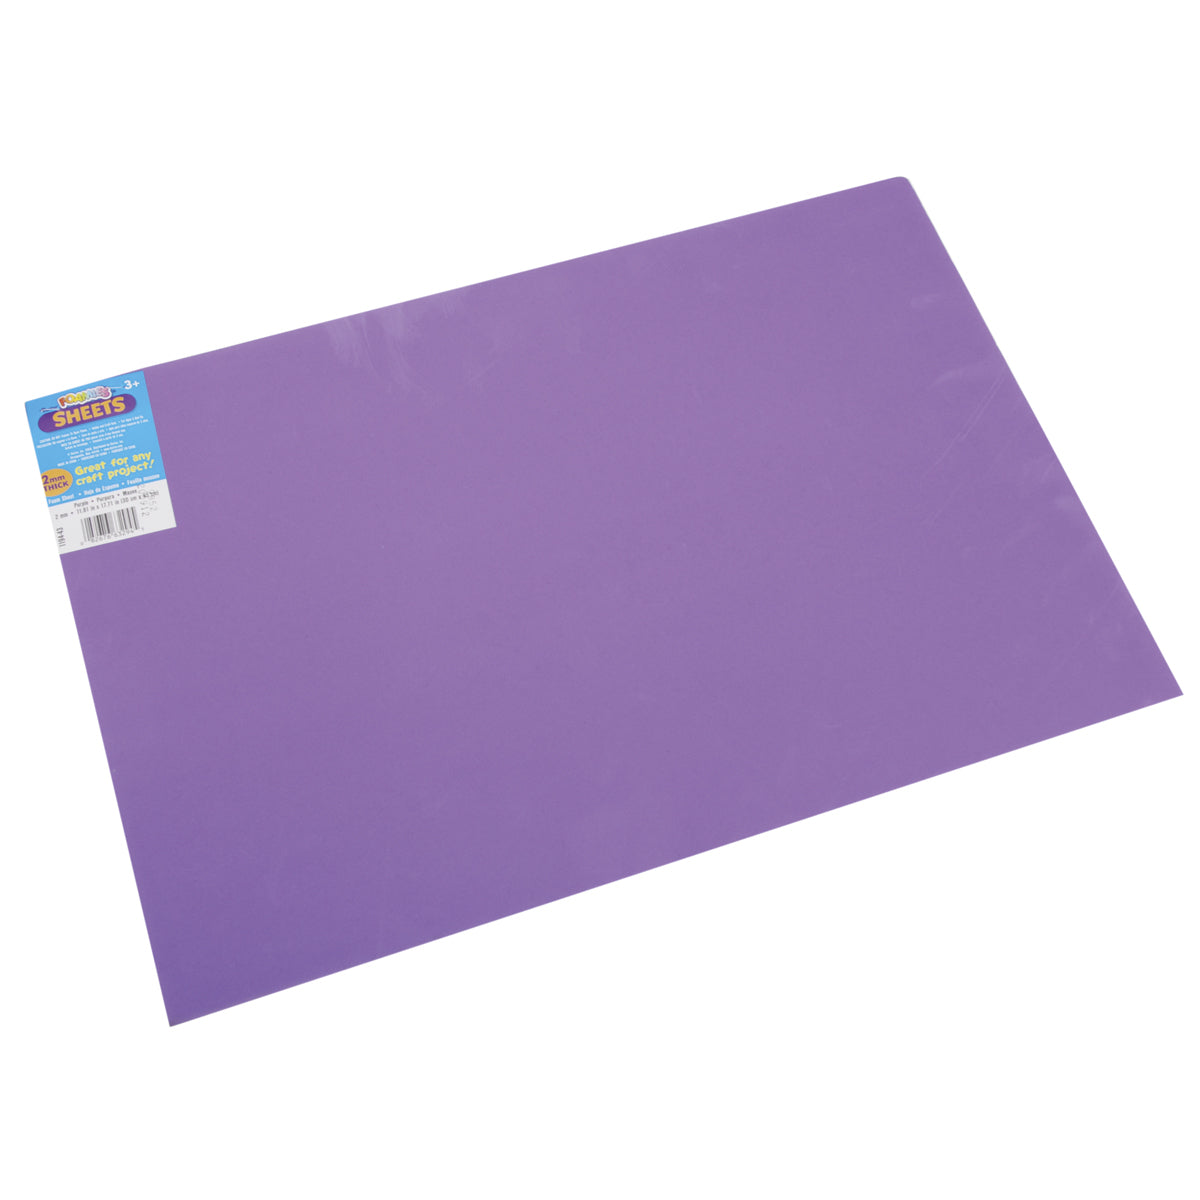 Foam Sheet Purple 2mm thick 12 X 18 Inches